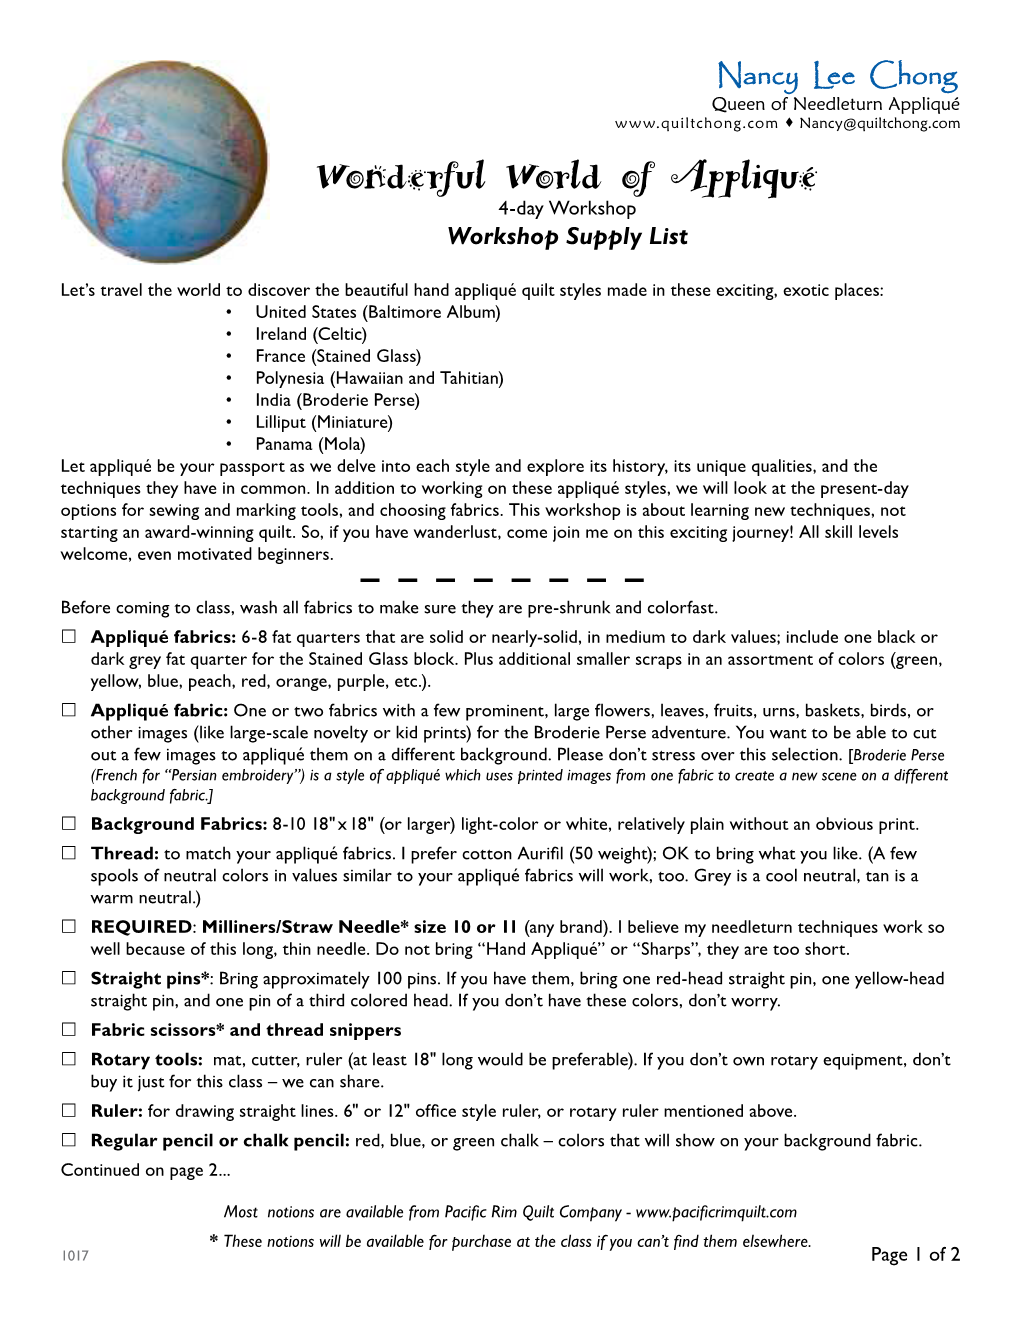 Wonderful World of Appliqué 4-Day Workshop Workshop Supply List